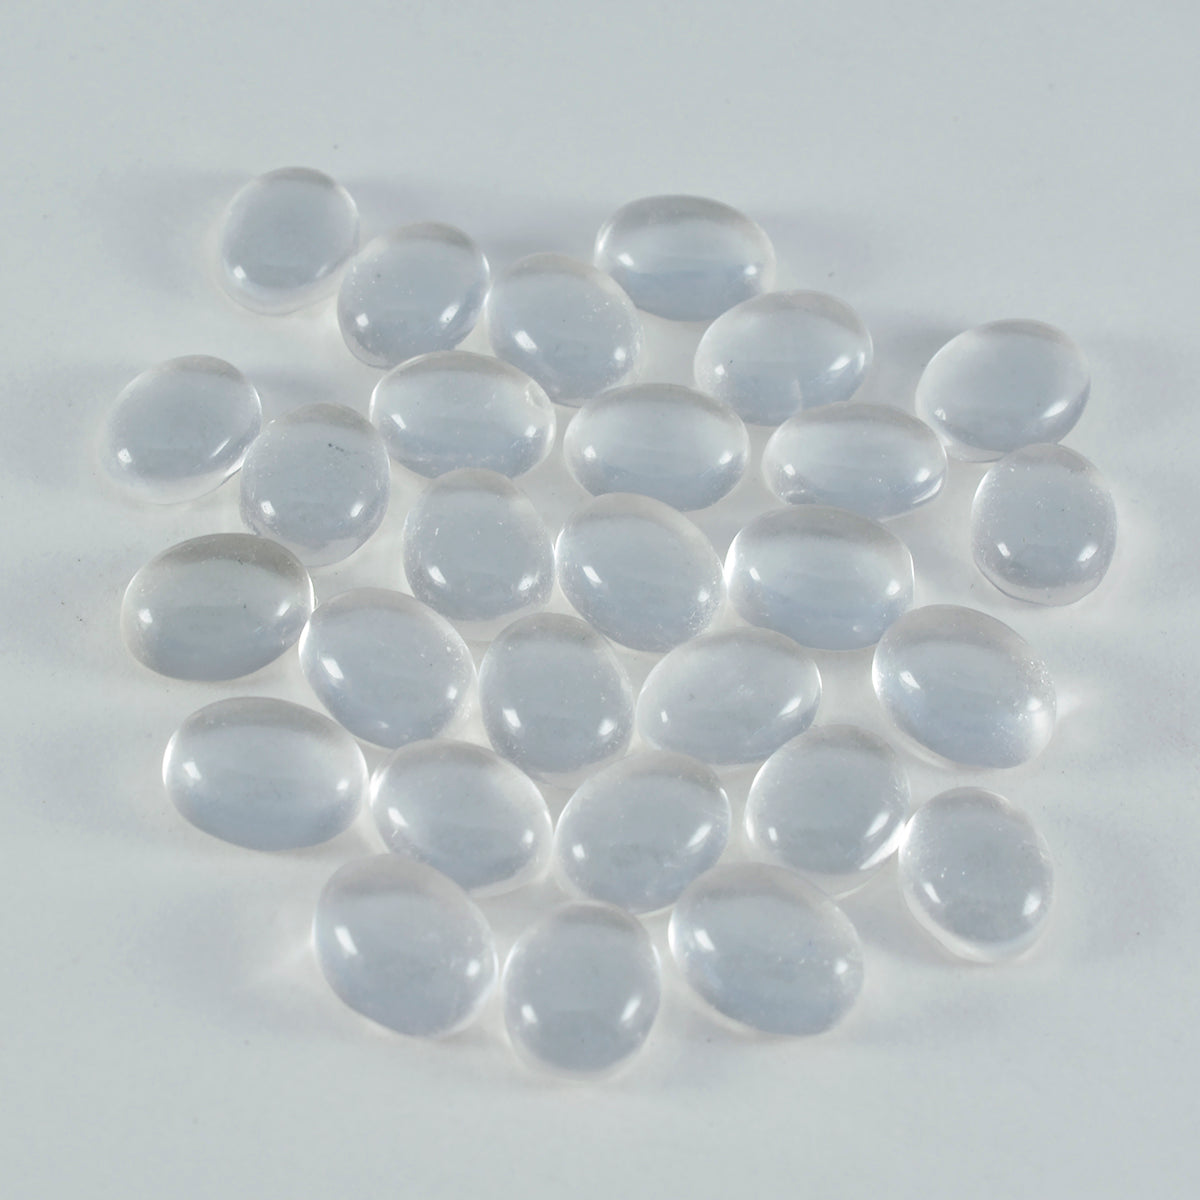 riyogems 1pc ホワイト クリスタル クォーツ カボション 6x8 mm 楕円形の驚くべき品質のルース宝石